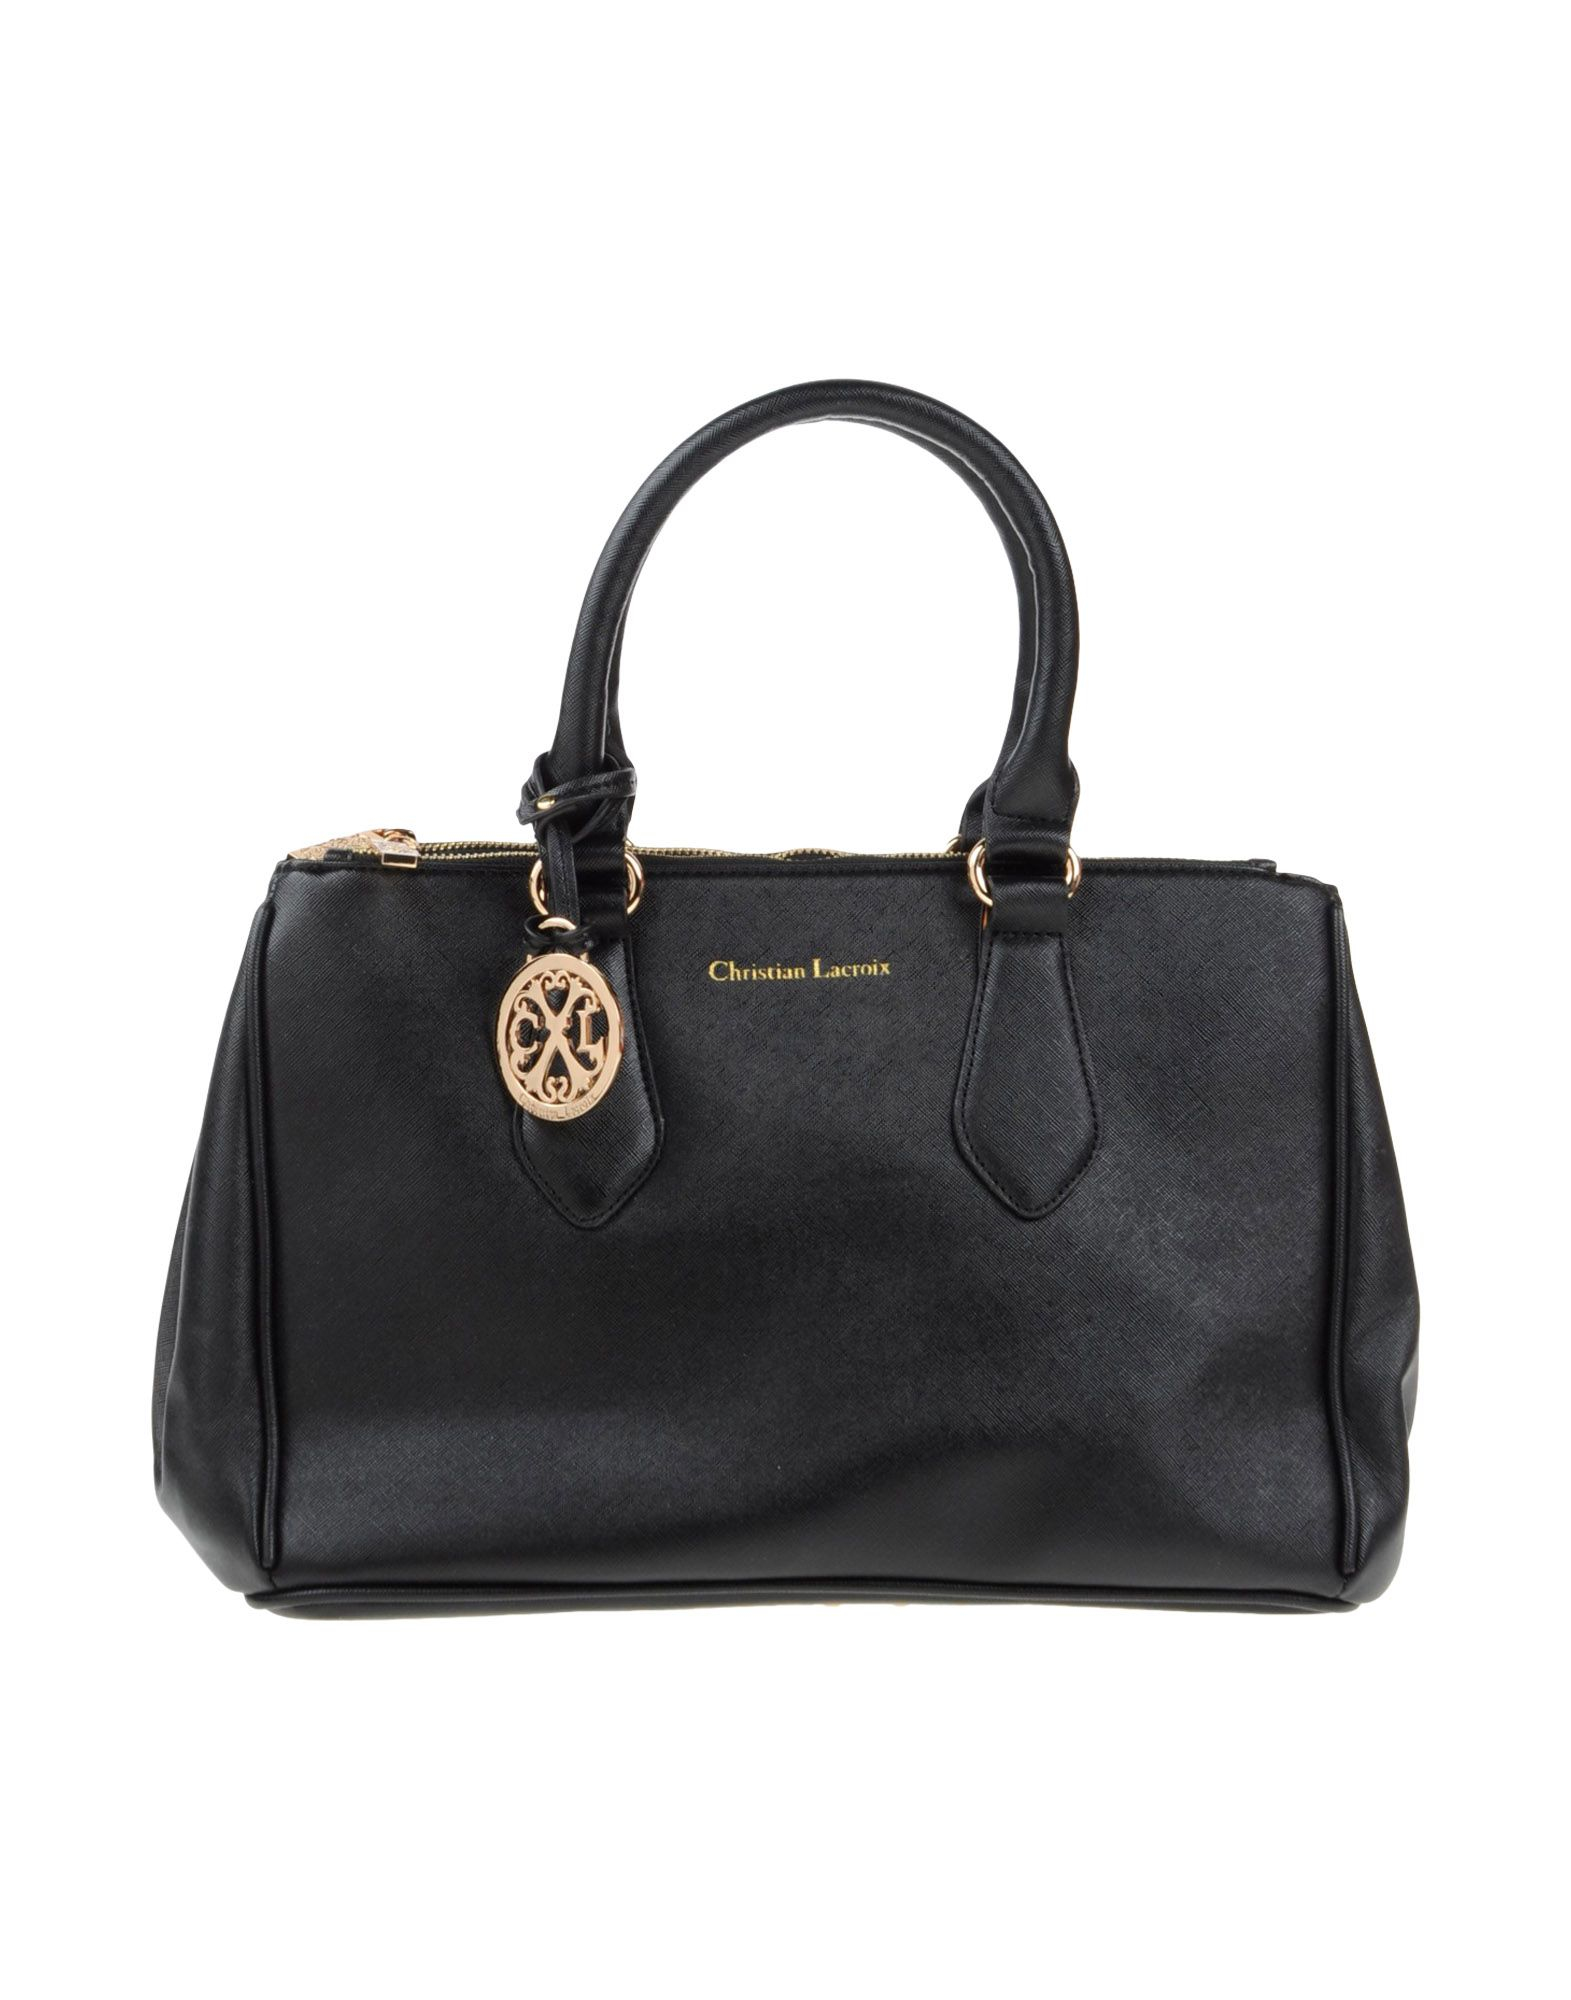 Lyst - Christian Lacroix Handbag in Black